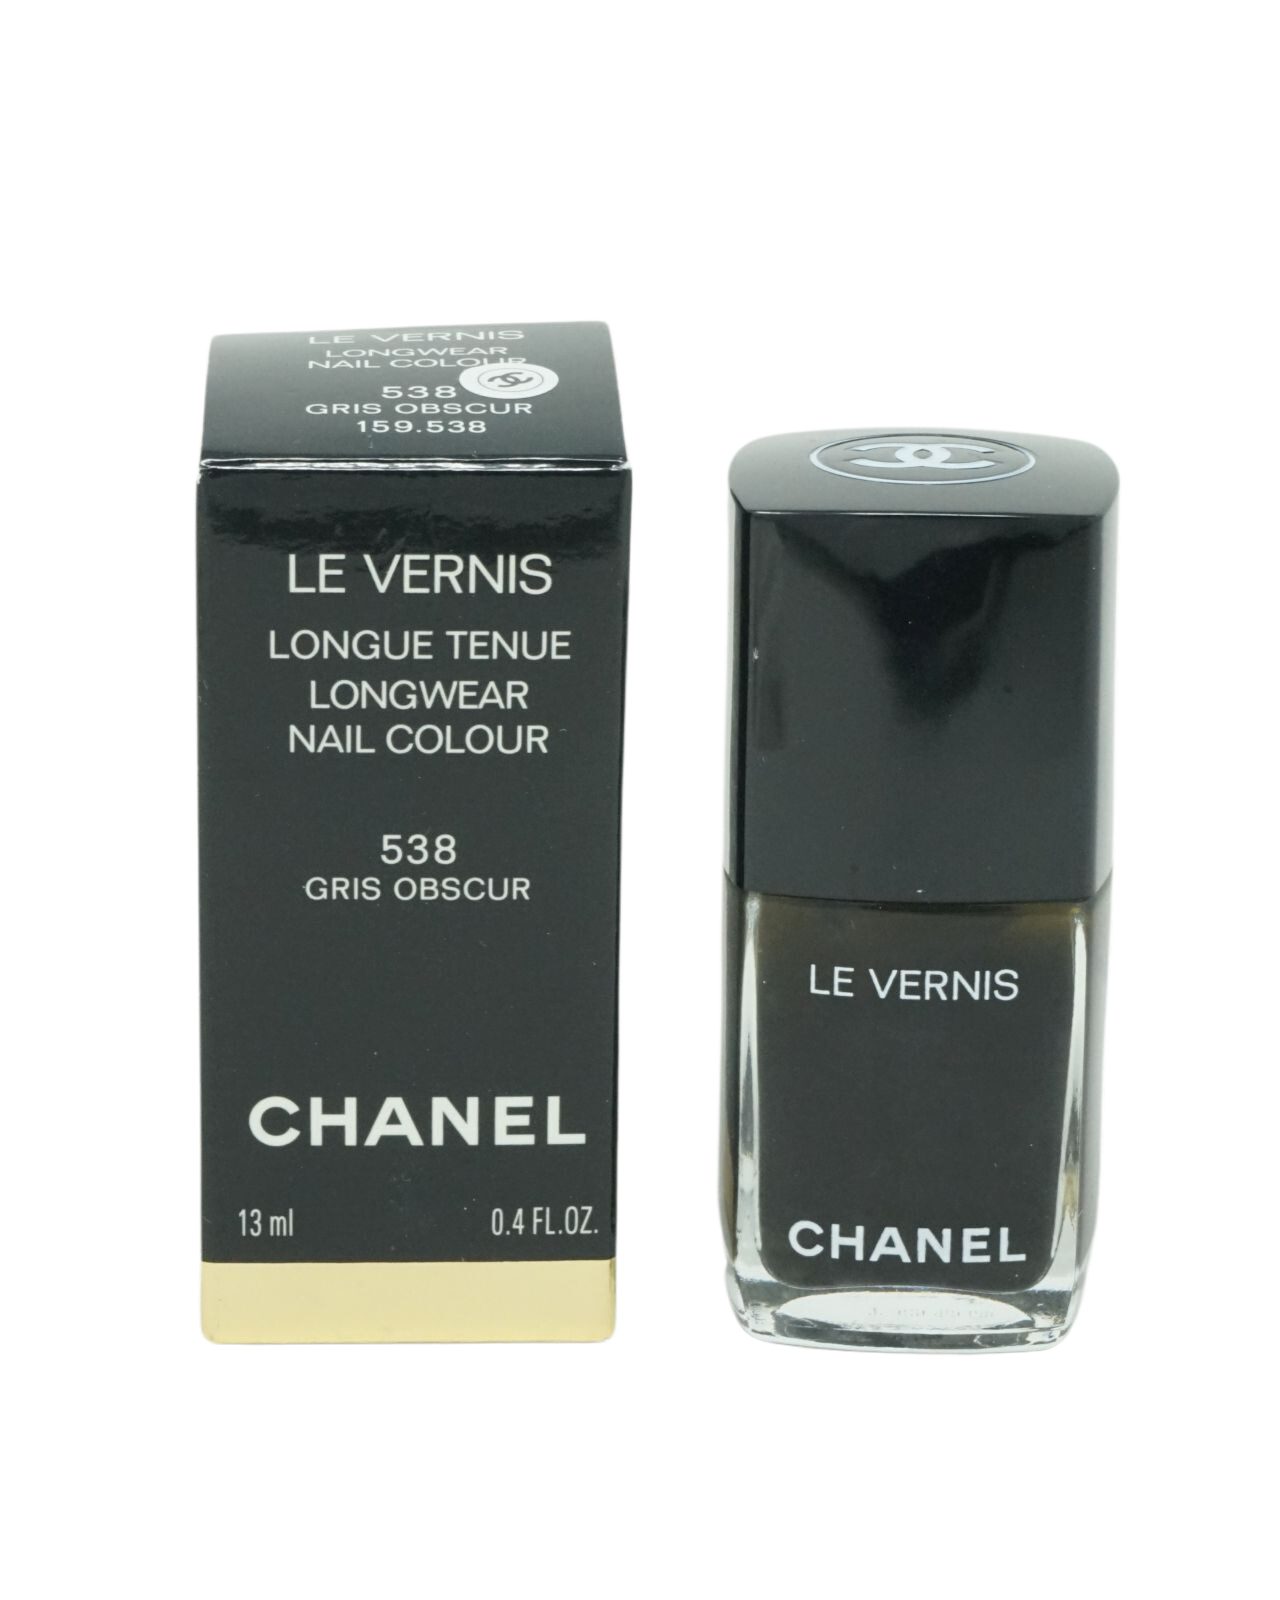 CHANEL Nagellack Chanel Le Vernis Longwear Nagellack 13ml 538 Gris Obscur